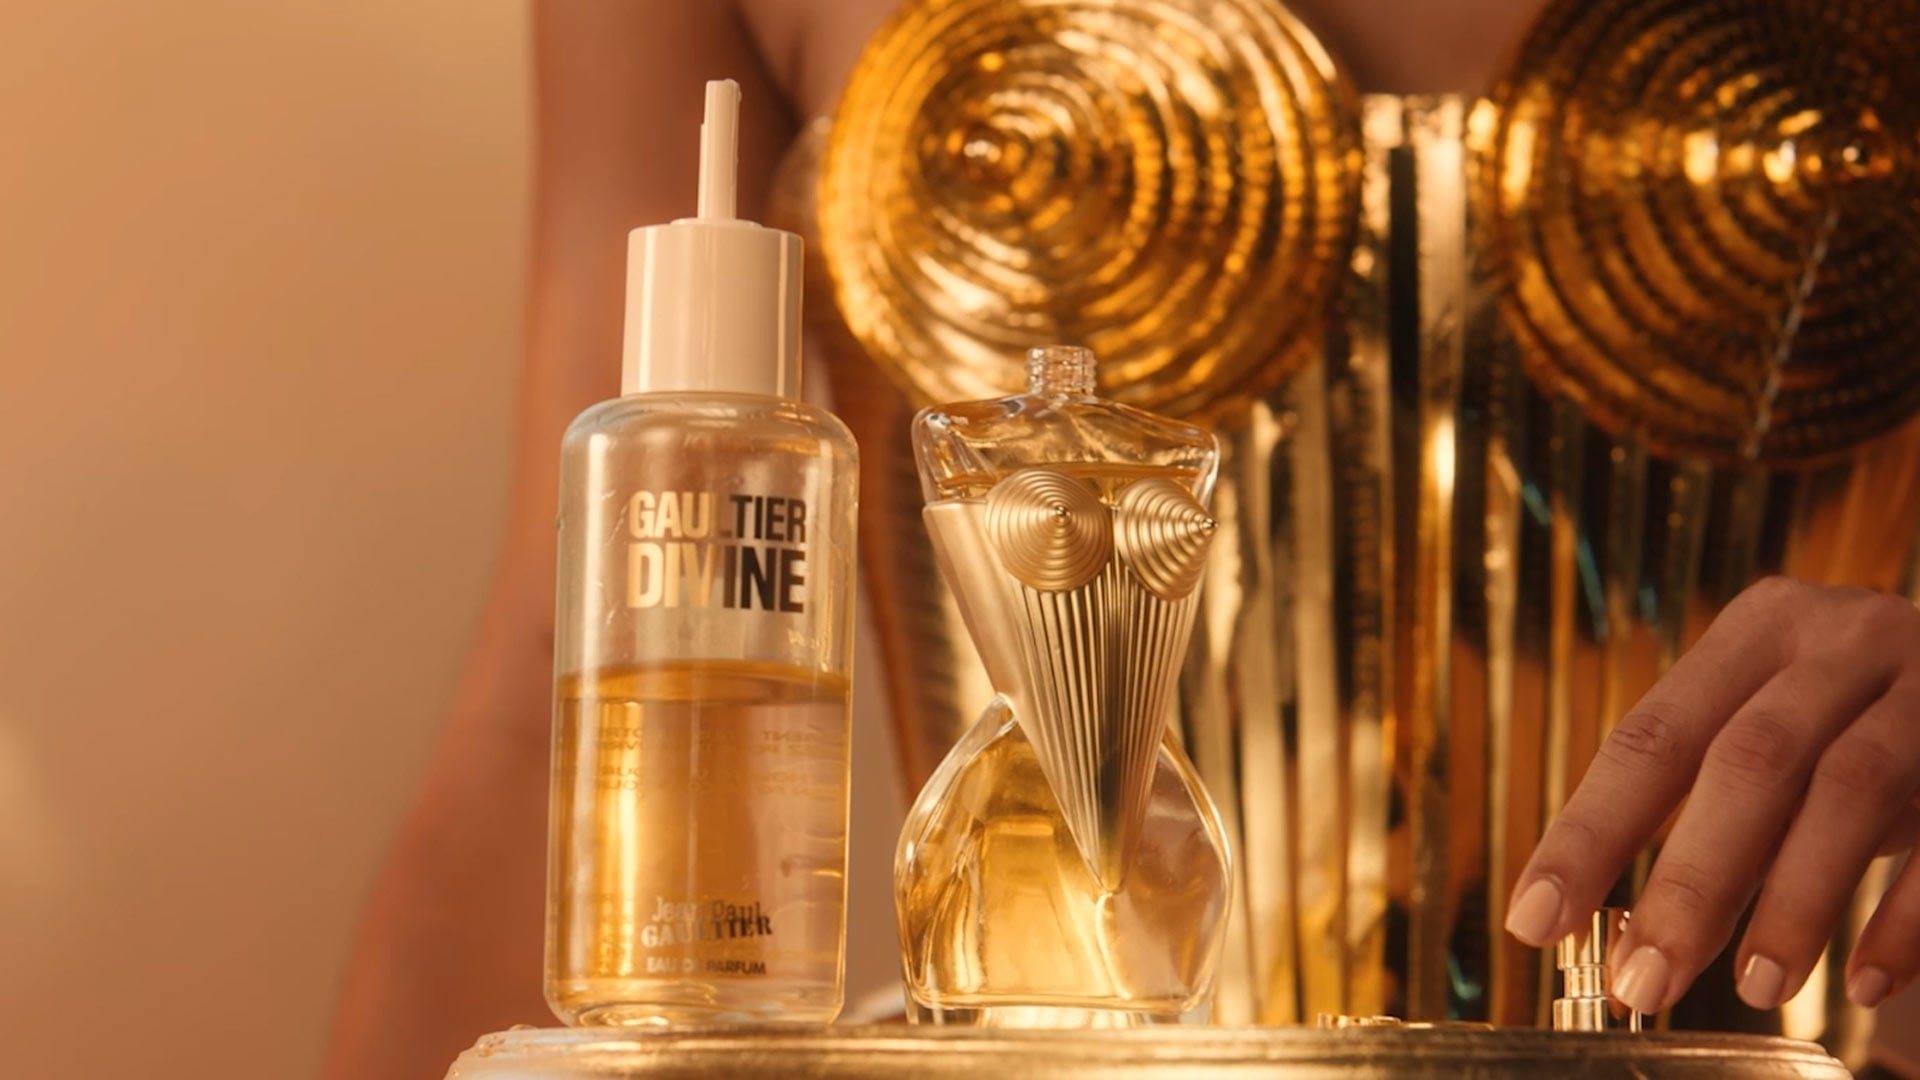 La recharge Gaultier Divine Eau de Parfum Jean Paul Gaultier